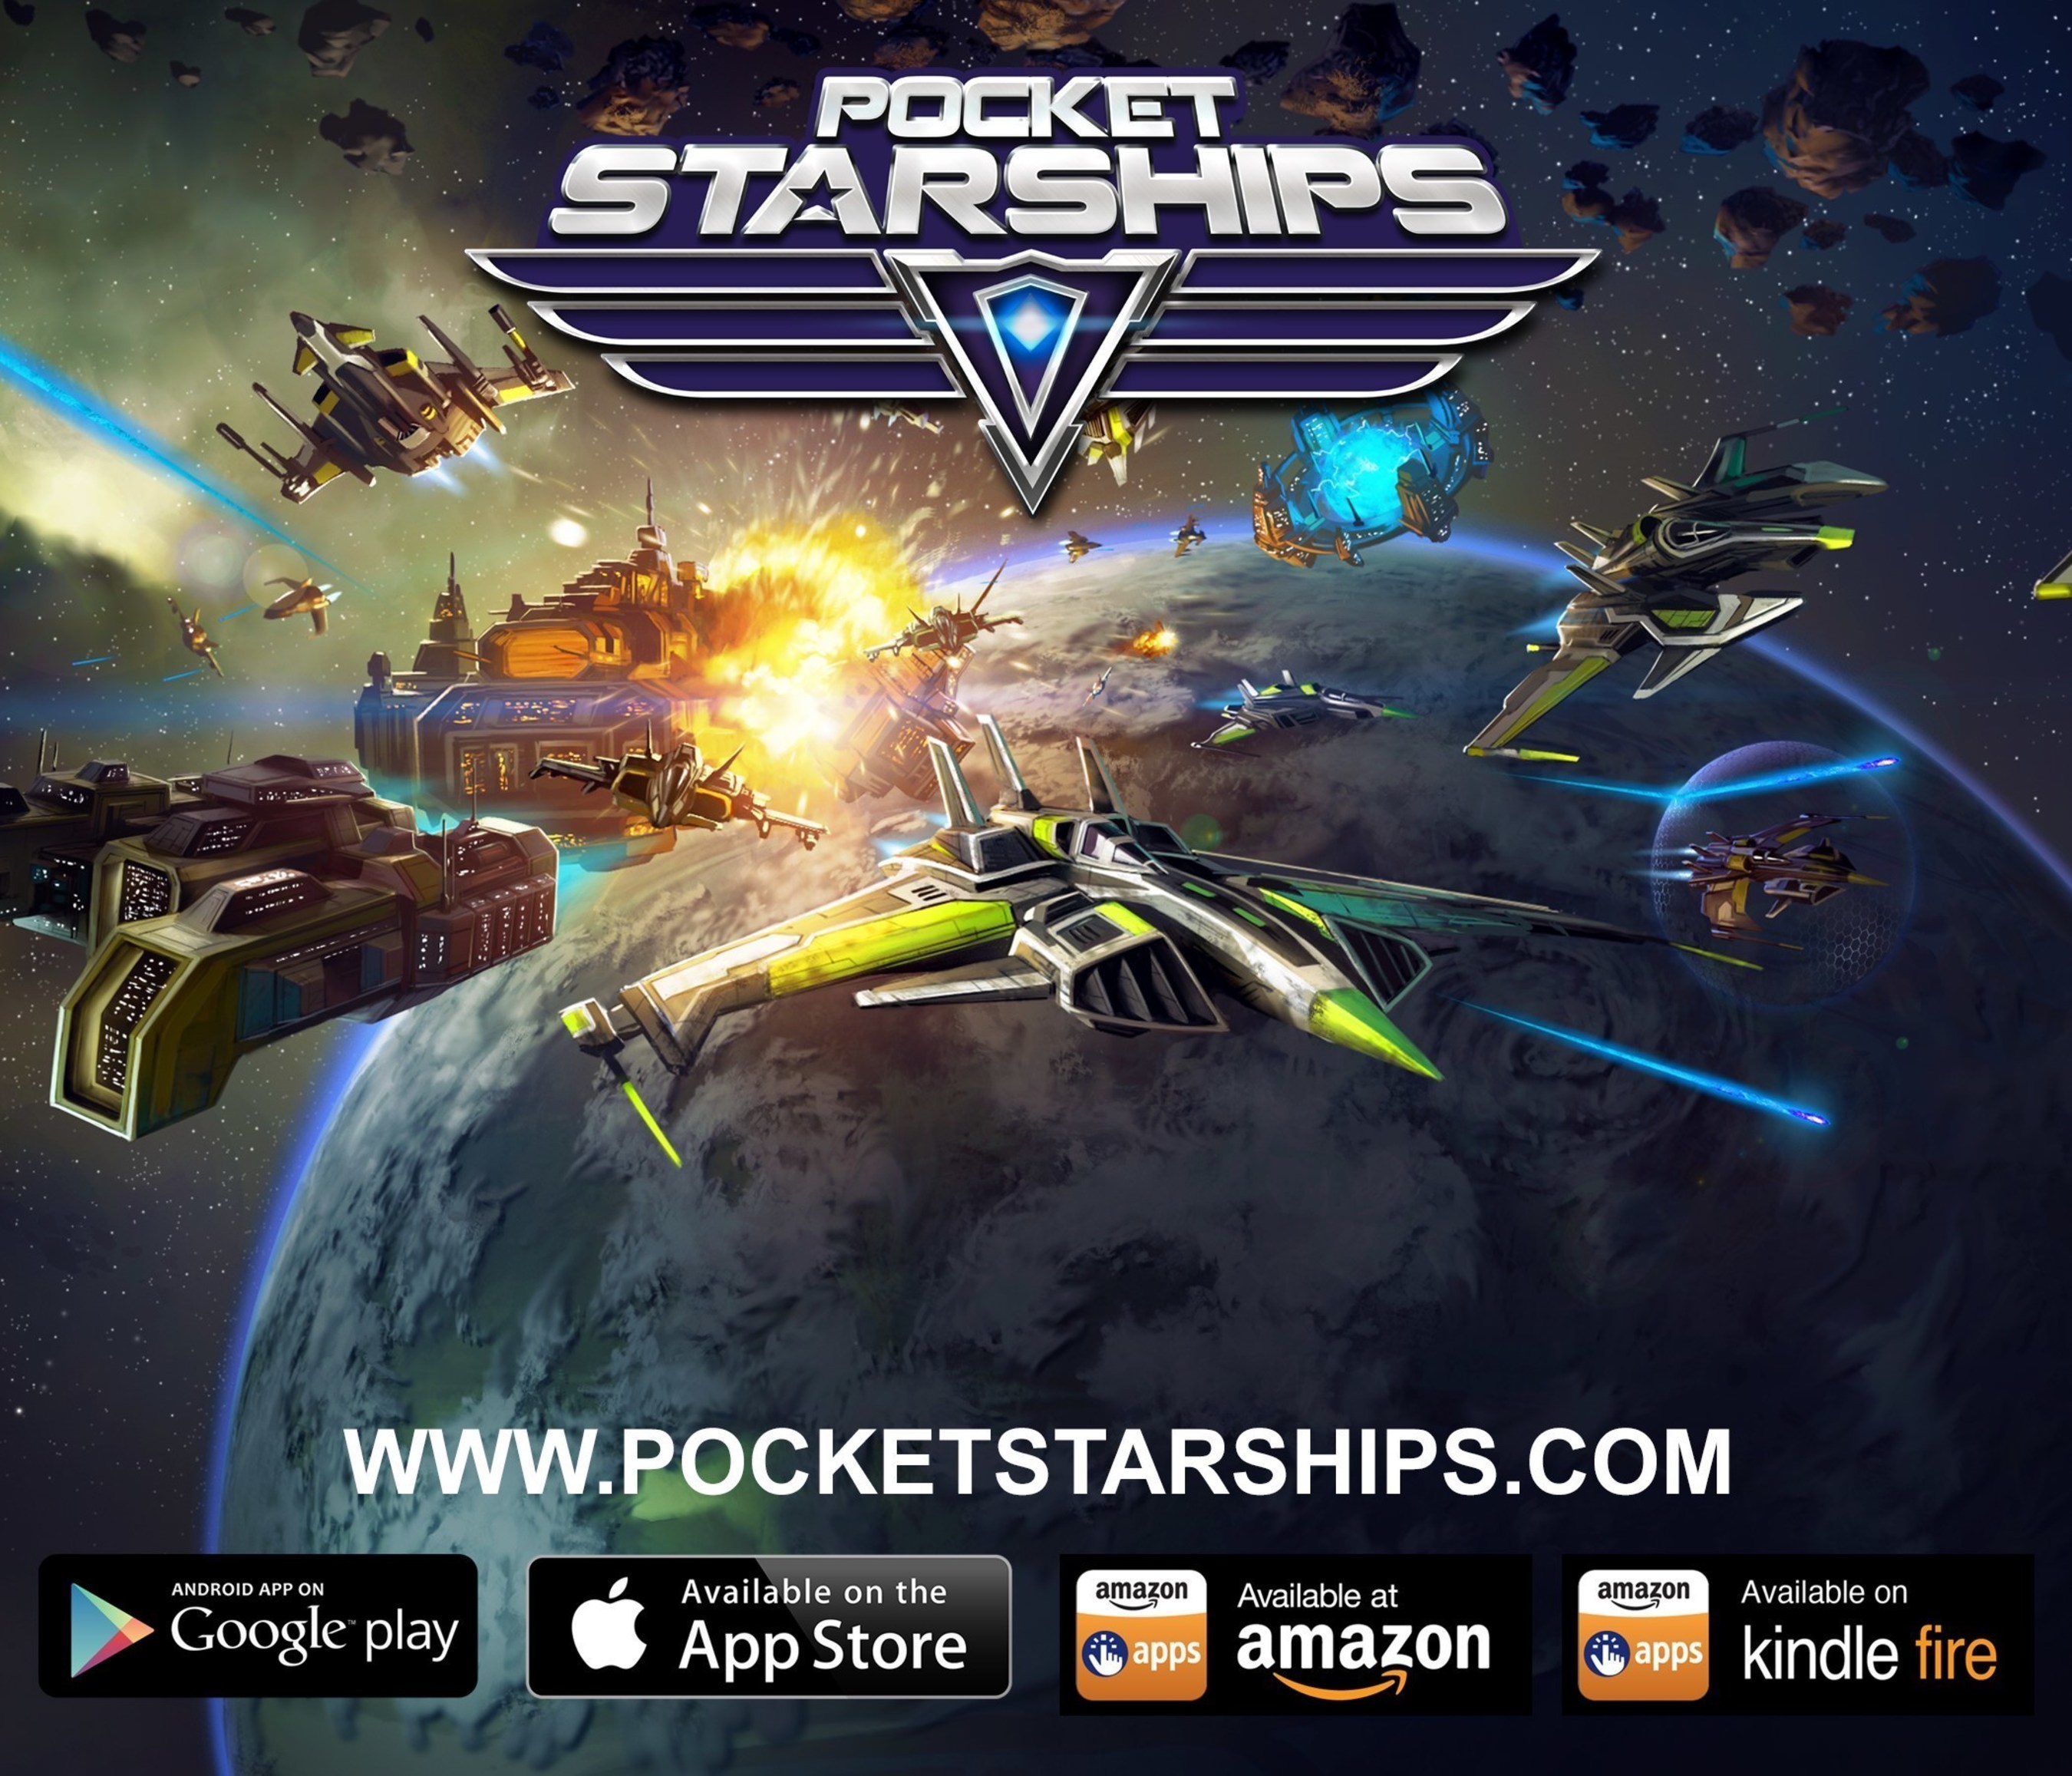 Pocket Starships - Real-Time, Cross-Platform Action